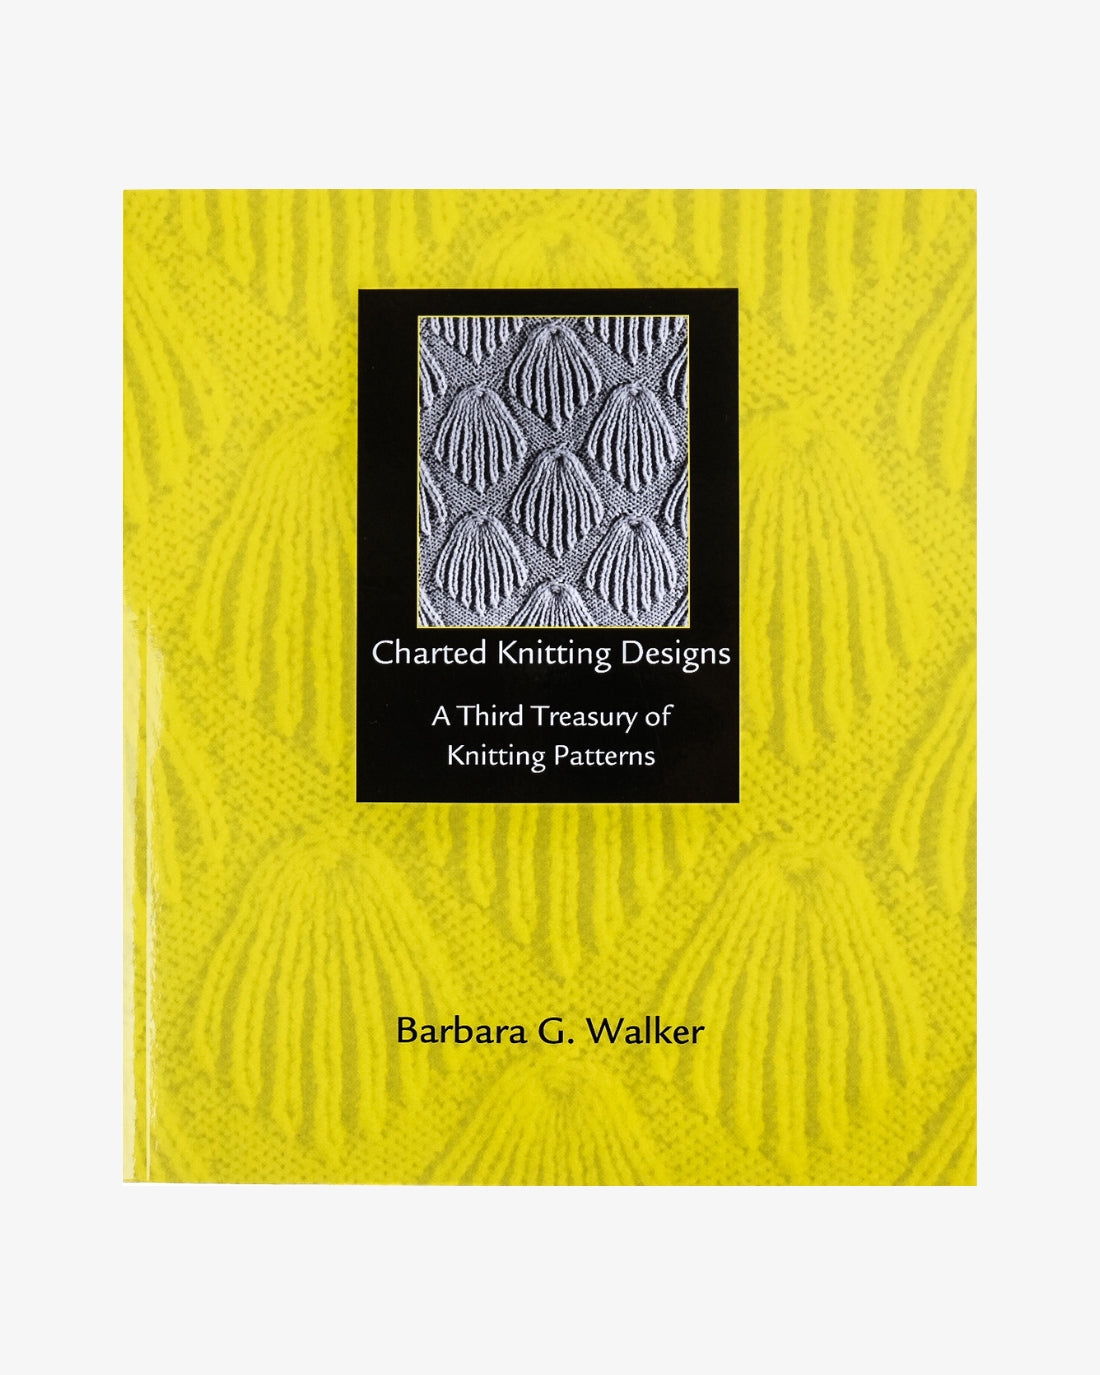 Charted Knitting Designs, a Third Treasury by Barbara G. Walker